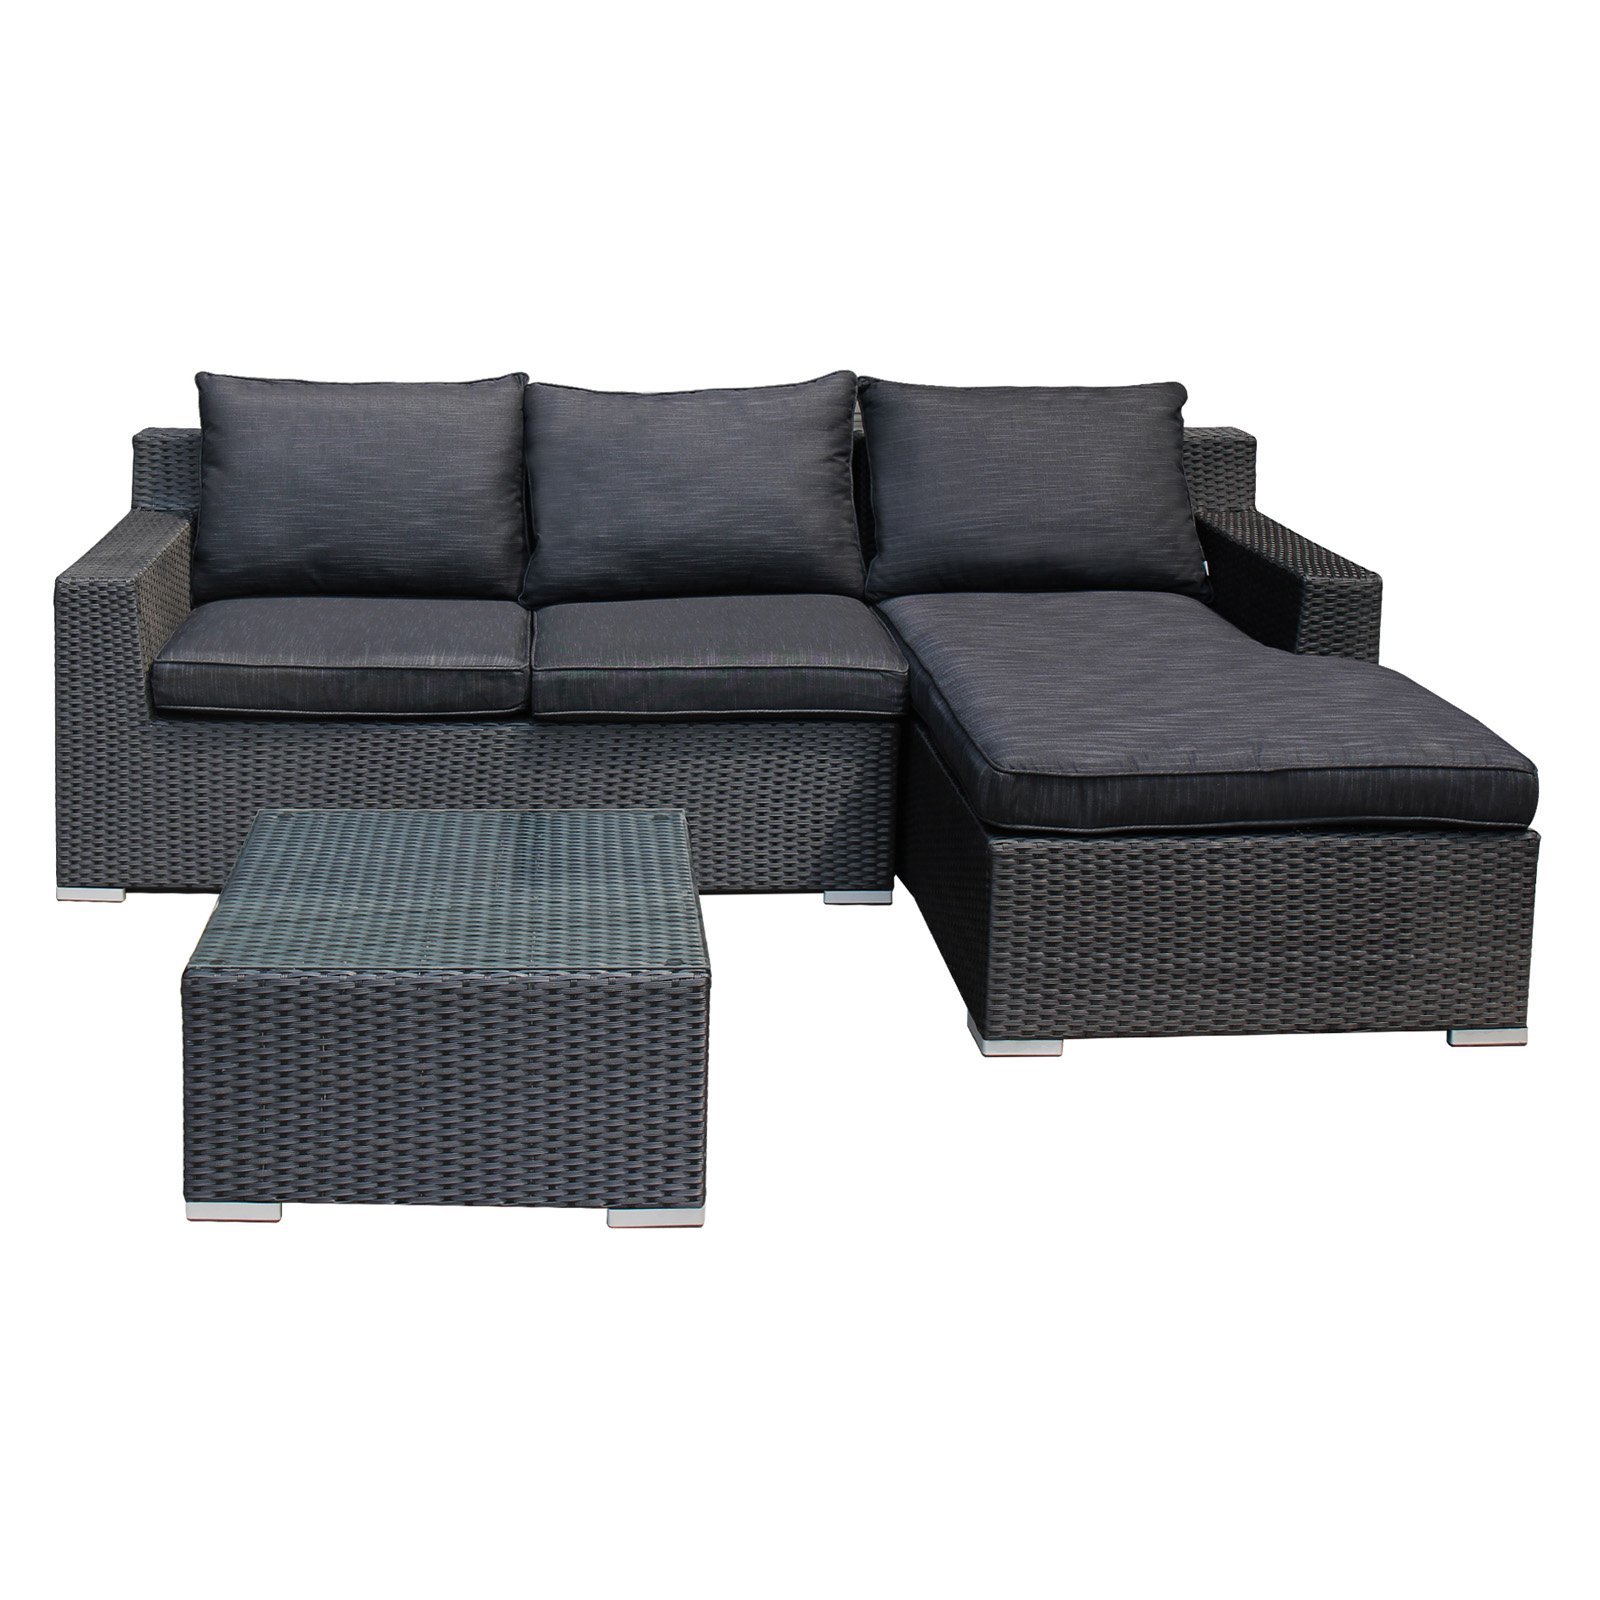 Magari Furniture Complete Outdoor Resin Wicker 3 Piece Patio Conversation Set - image 1 of 7